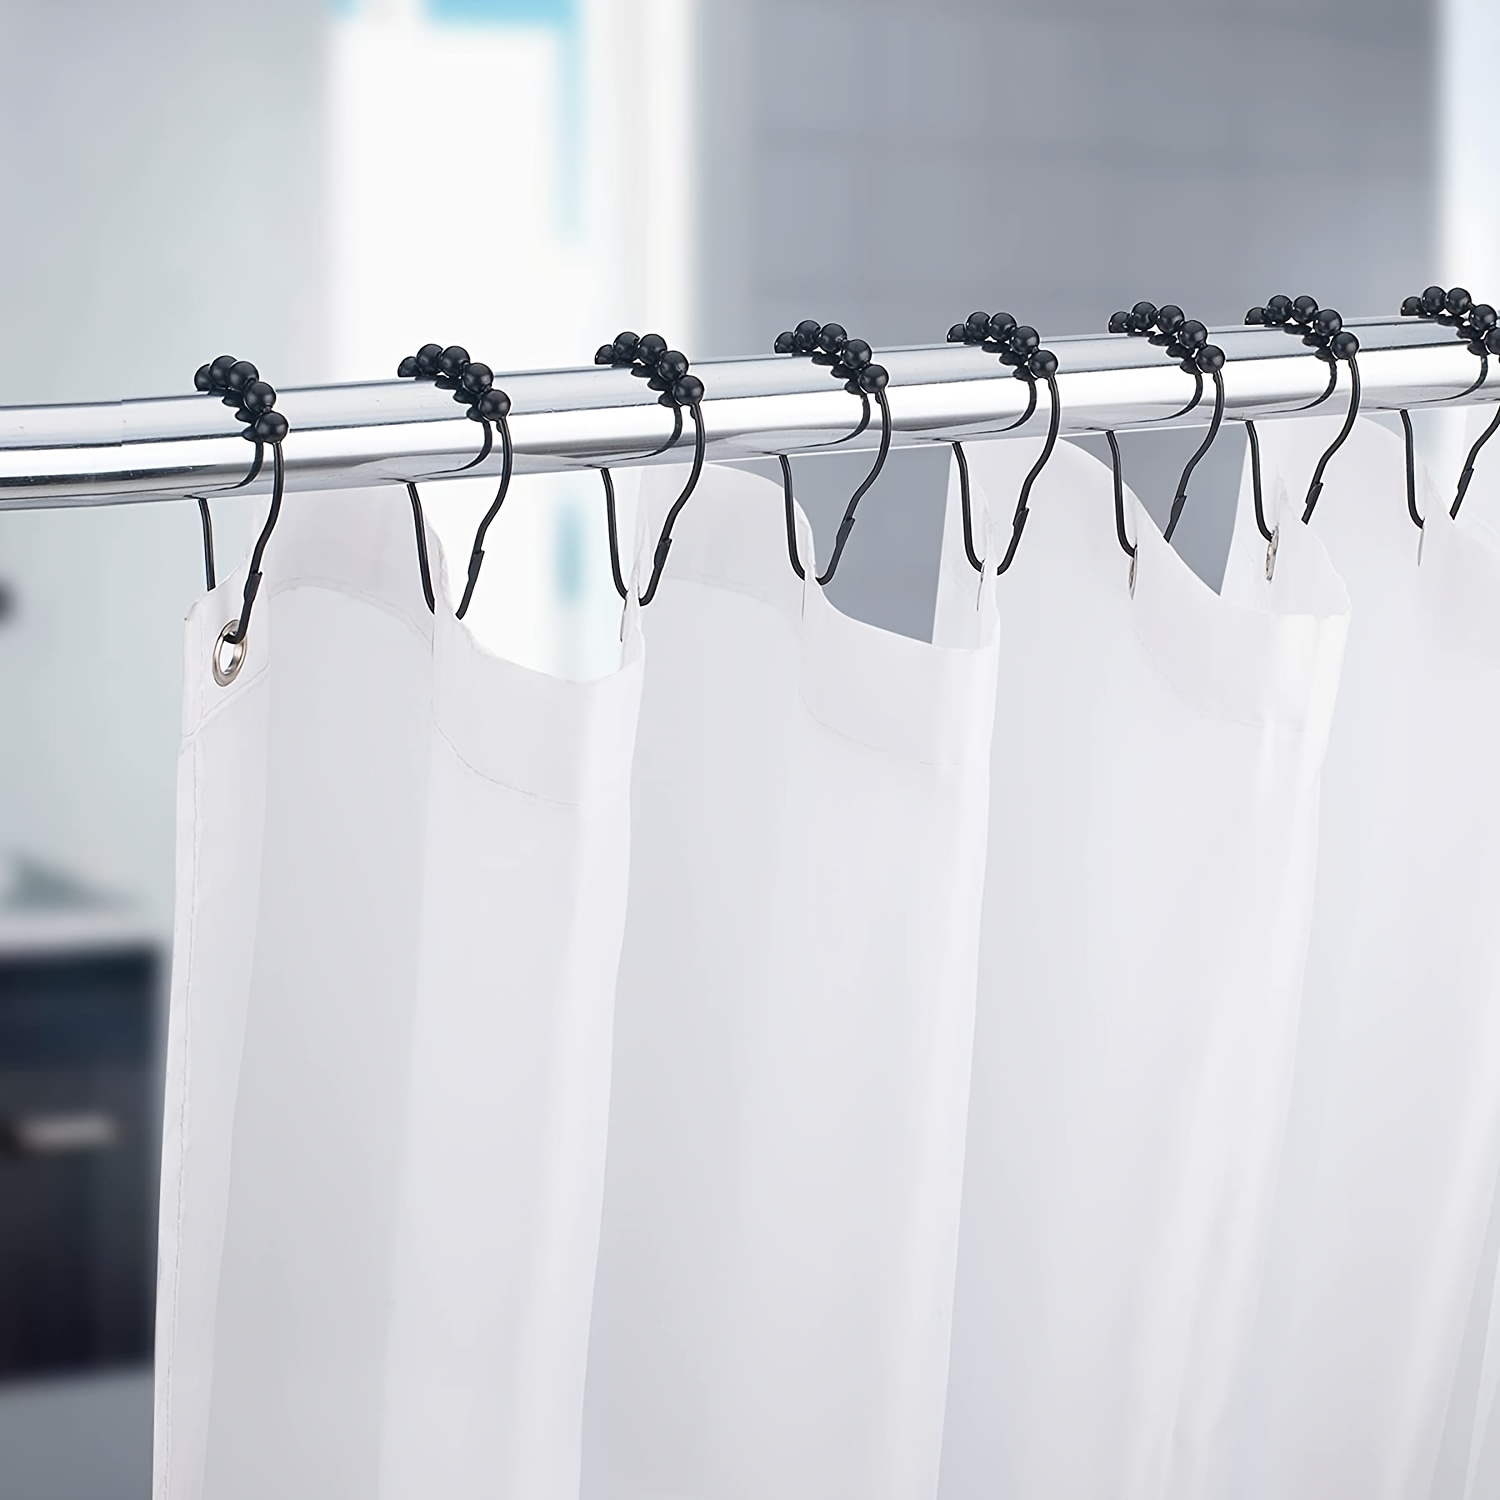 Set Of 12 Shower Curtain Hooks Rings, Black Shower Curtain Rings, Stainless  Steel Rust-resistant Shower Hooks For Shower Curtain, Bathroom Accessories